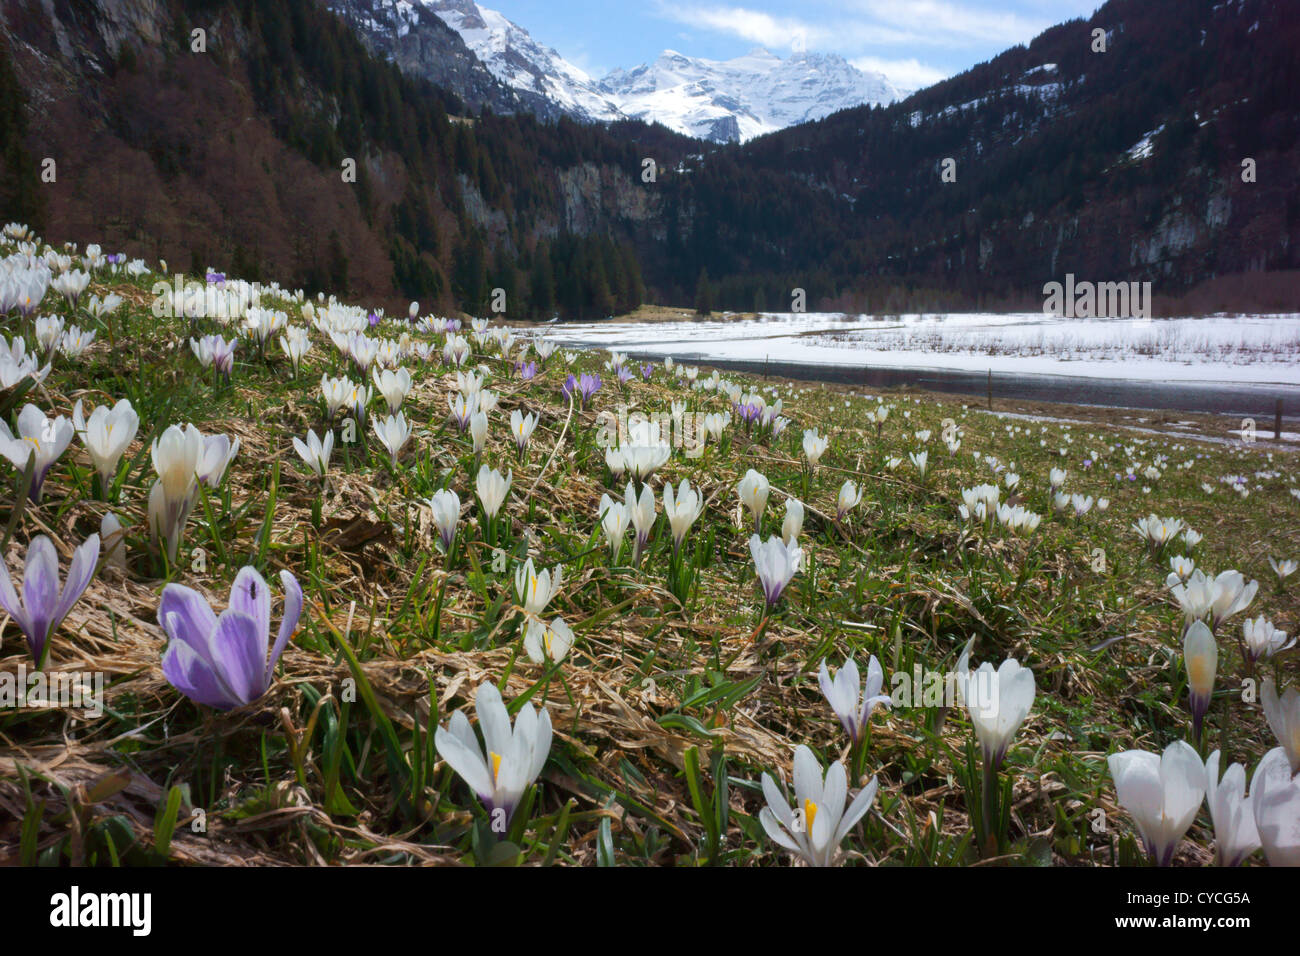 Crocus flowers on alpine meadow in Kiental, Bernese alps Switzerland Stock Photo